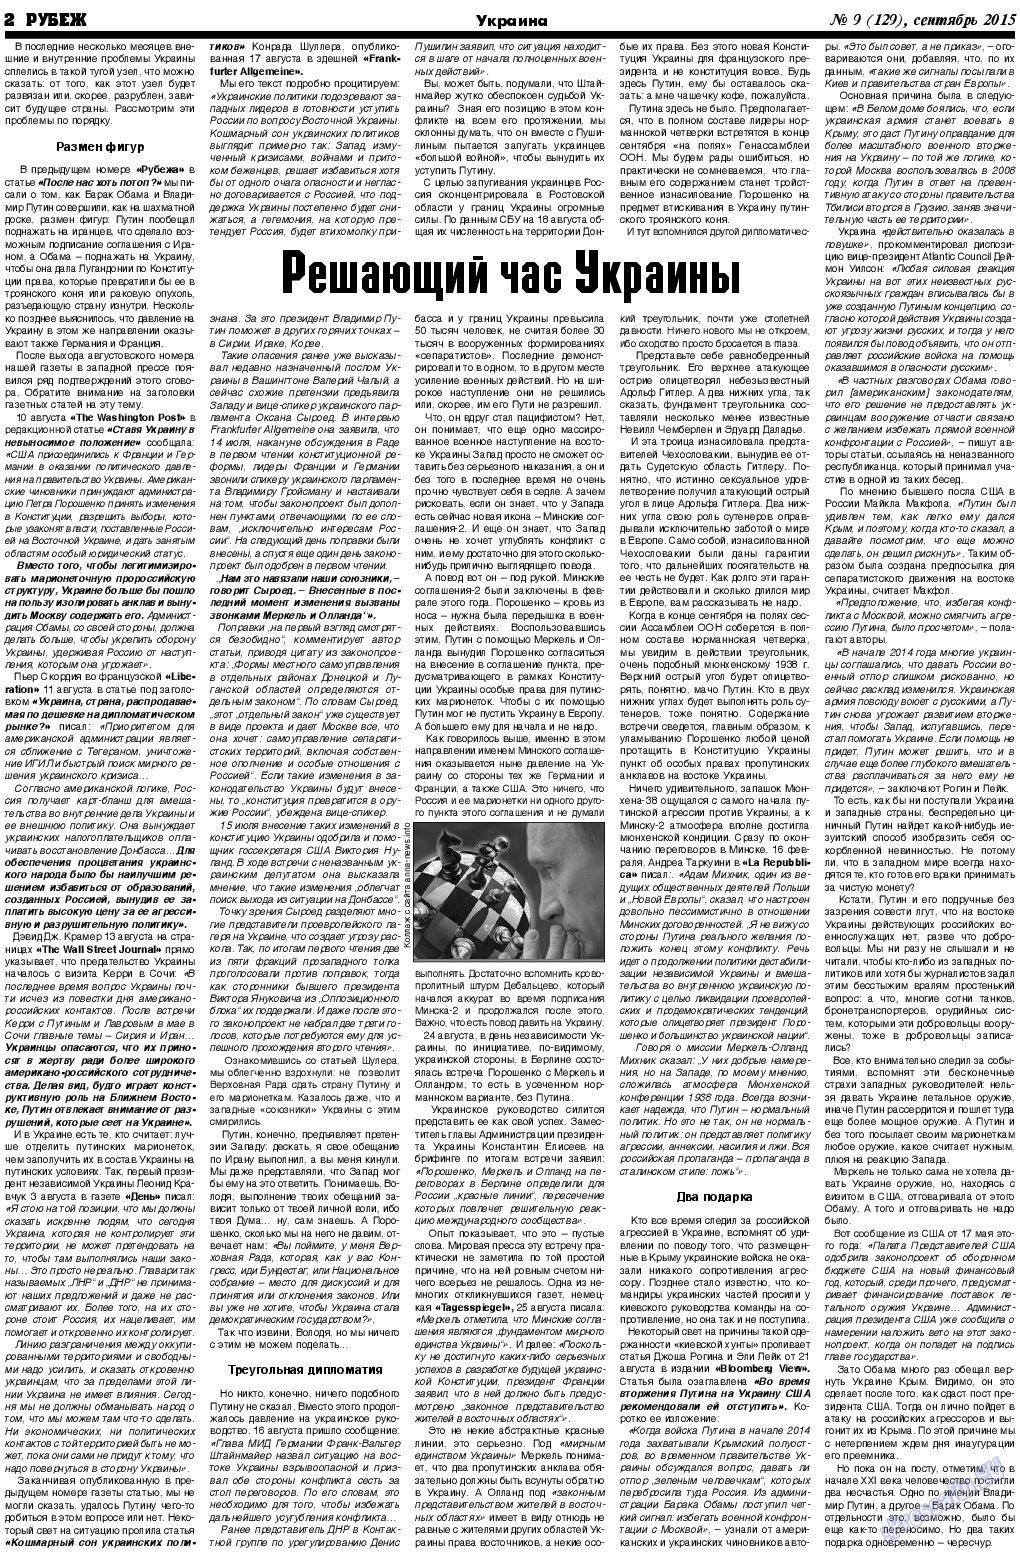 Рубеж, газета. 2015 №9 стр.2